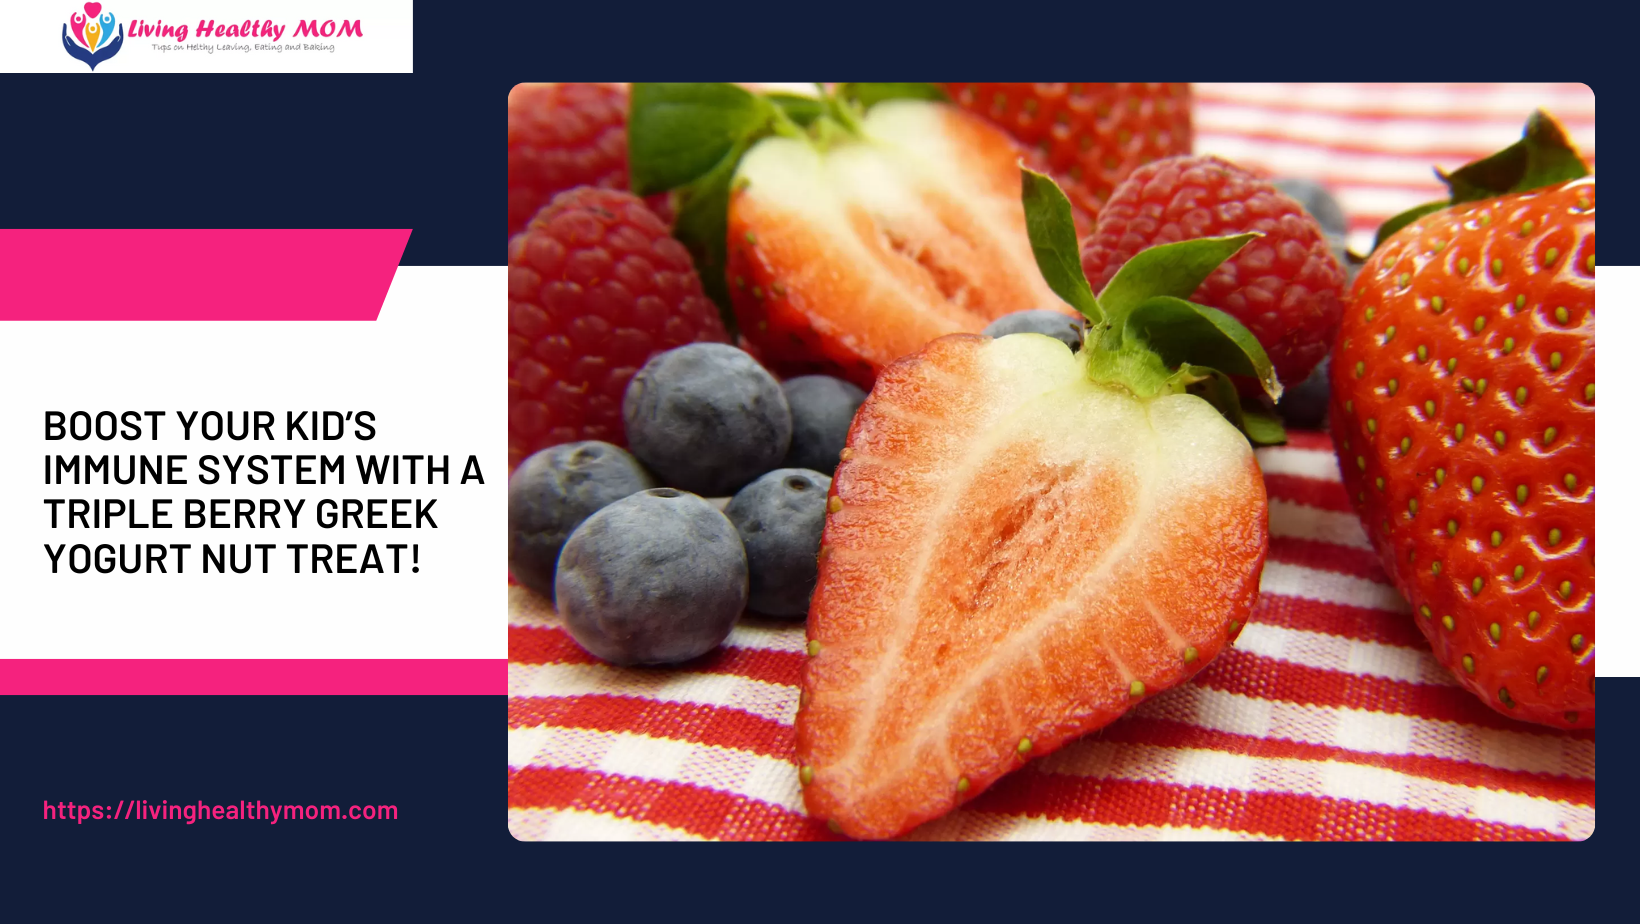 Boost Your Kid’s Immune System with a Triple Berry Greek Yogurt Nut Treat!